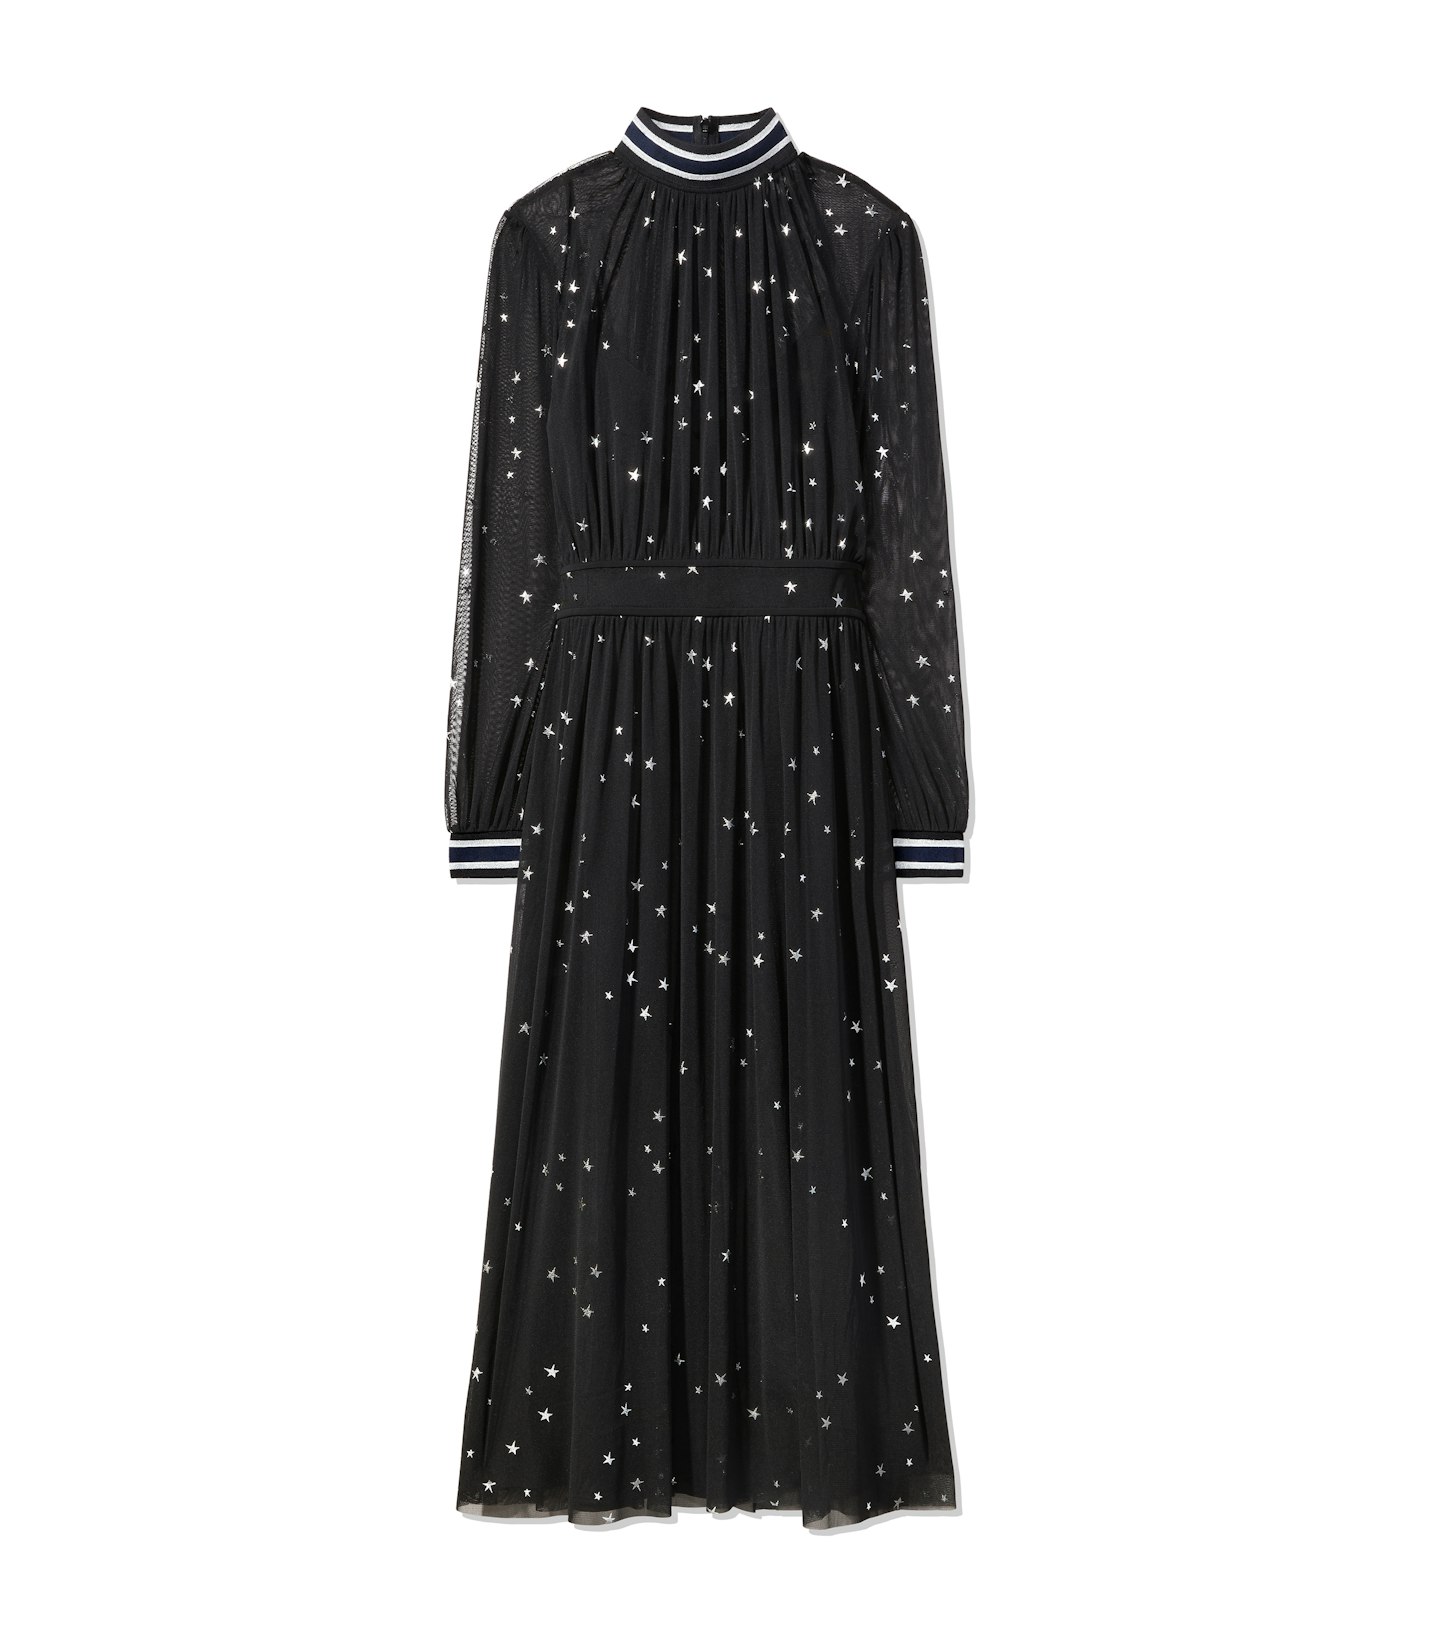 Mesh Star Dress, £375